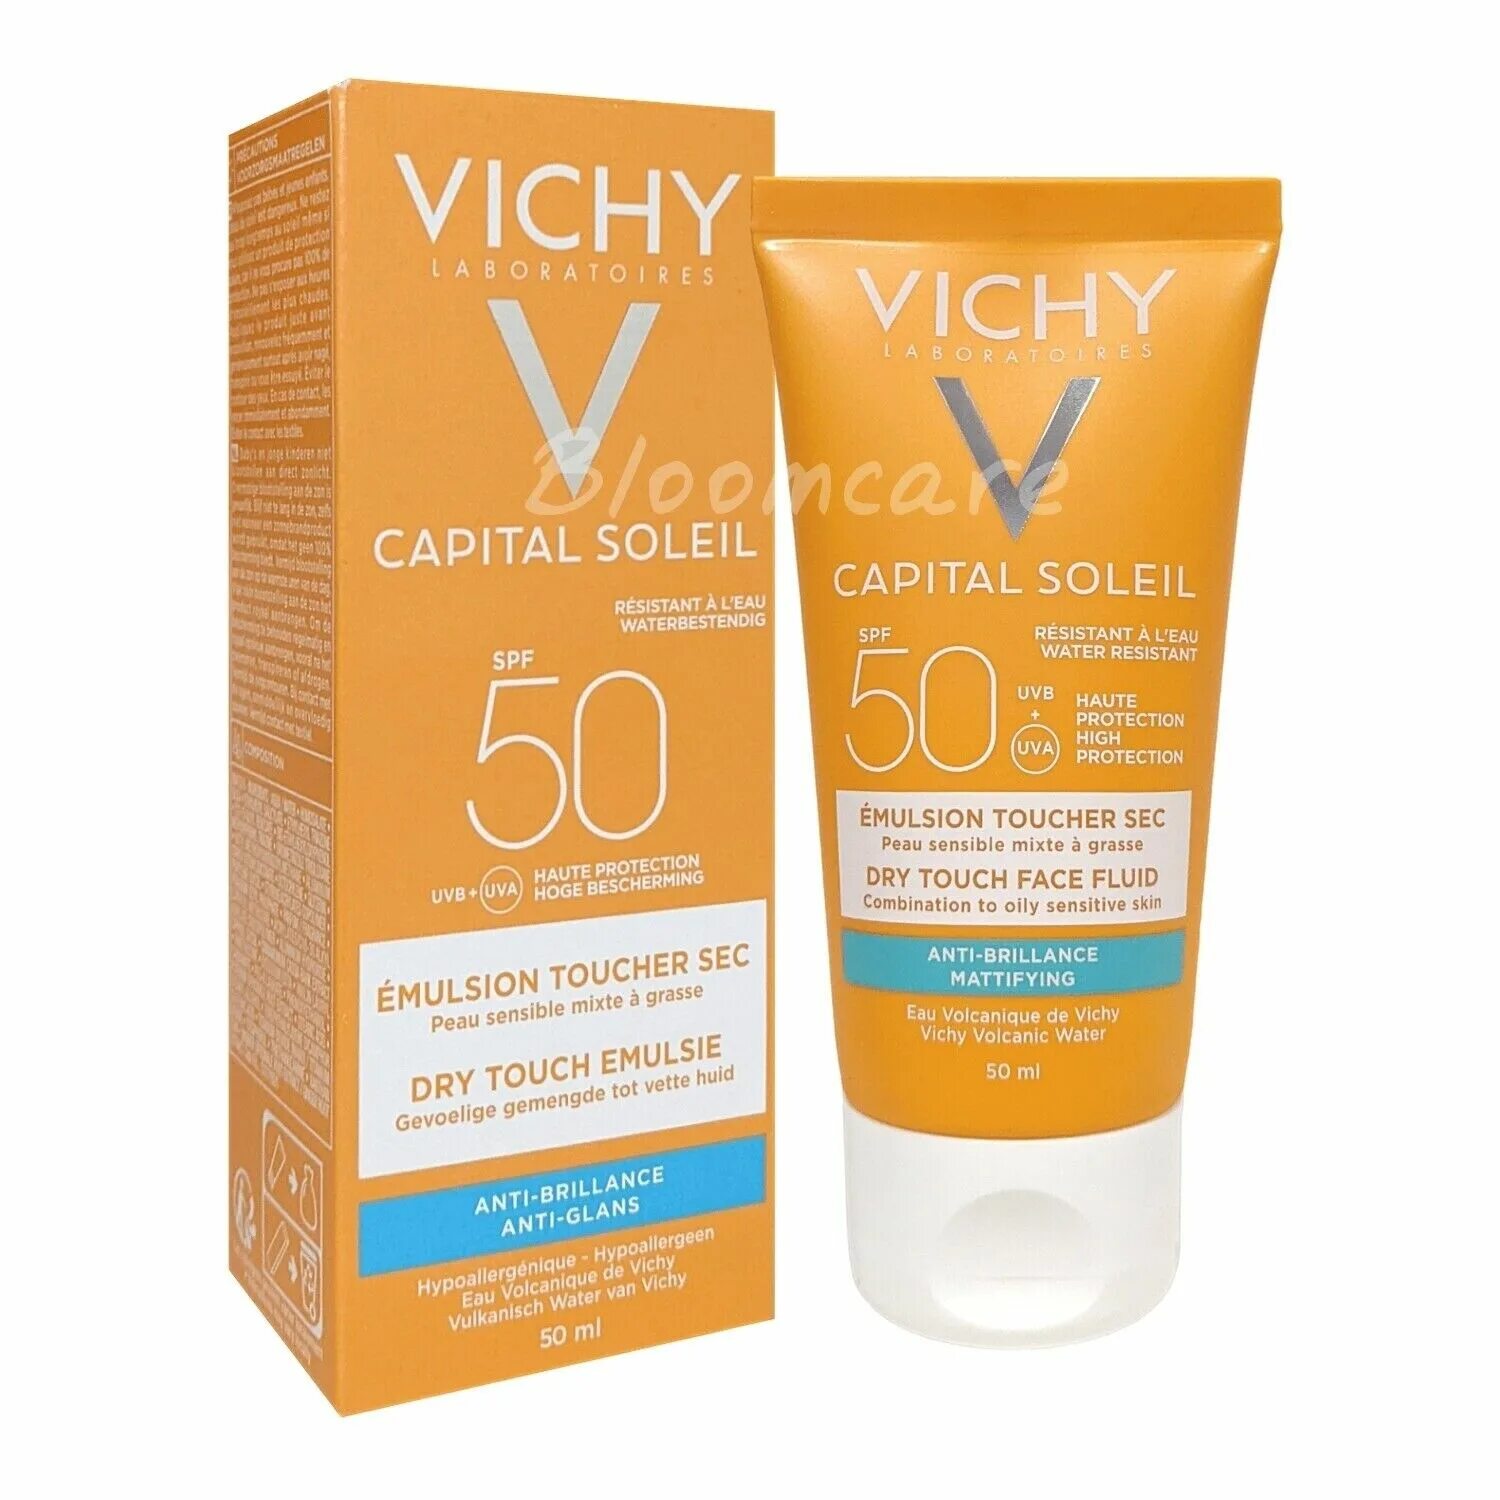 Capital soleil 50 мл vichy. Vichy SPF 50. Vichy СПФ 50. Vichy Capital Soleil Mattifying face Fluid Dry Touch SPF 50. Vichy Capital Soleil SPF 50.